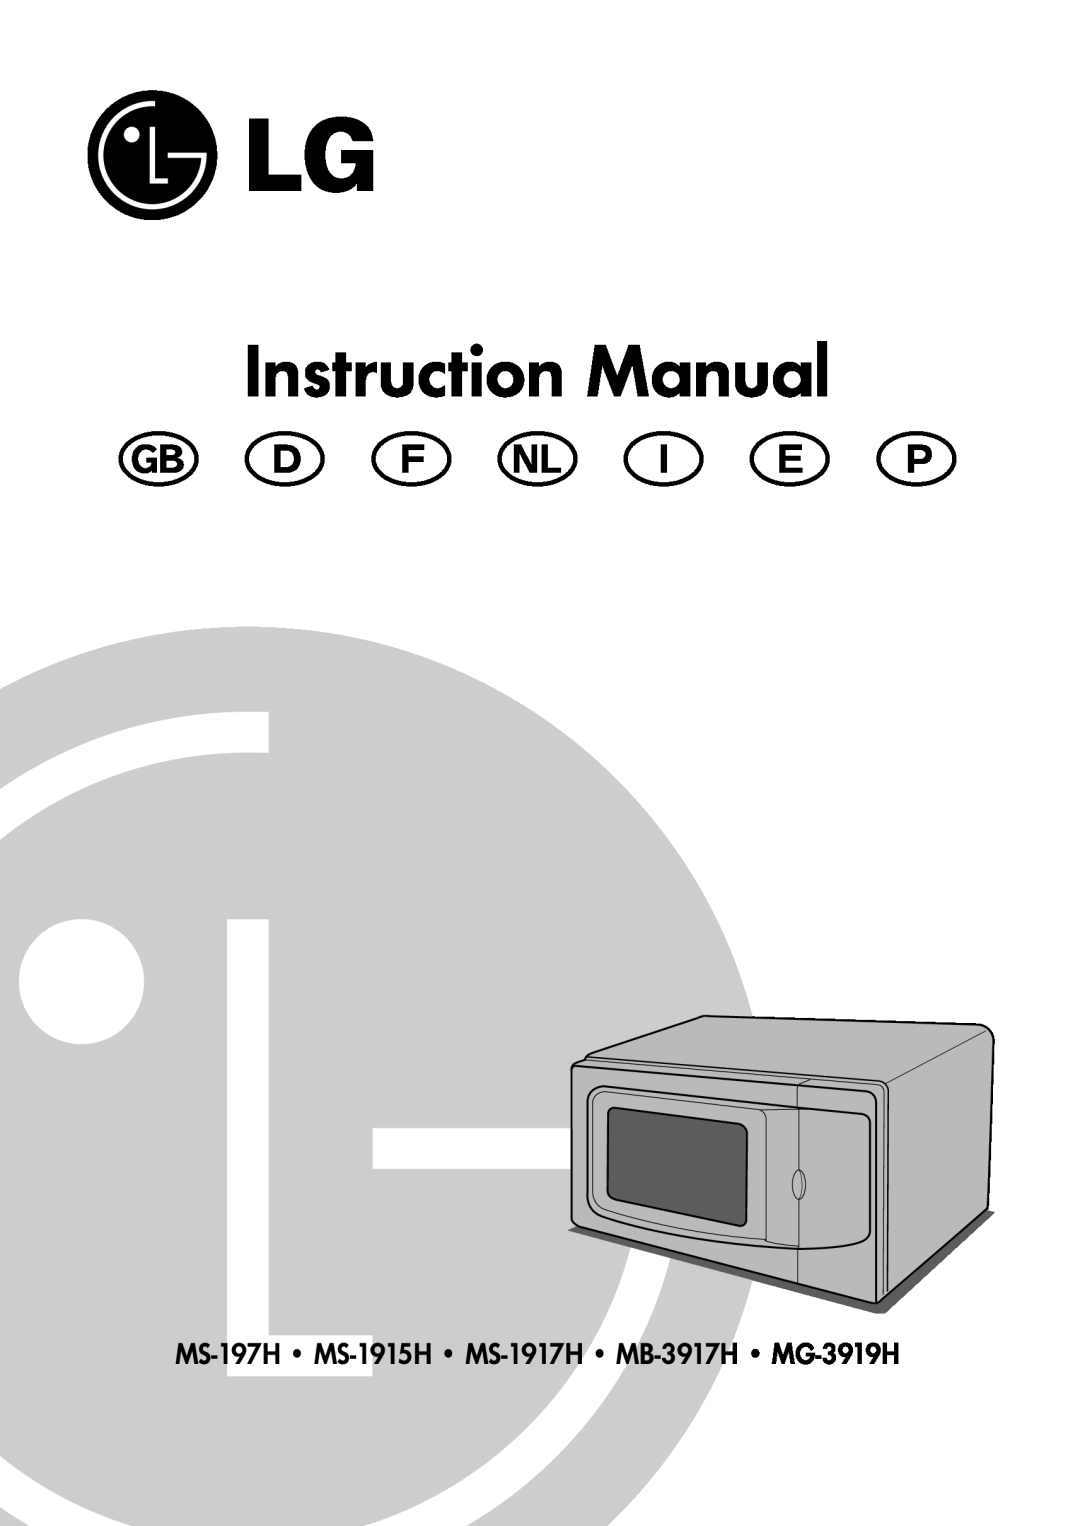 LG Electronics instruction manual Instruction Manual, MS-197H MS-1915H MS-1917H MB-3917H MG-3919H 